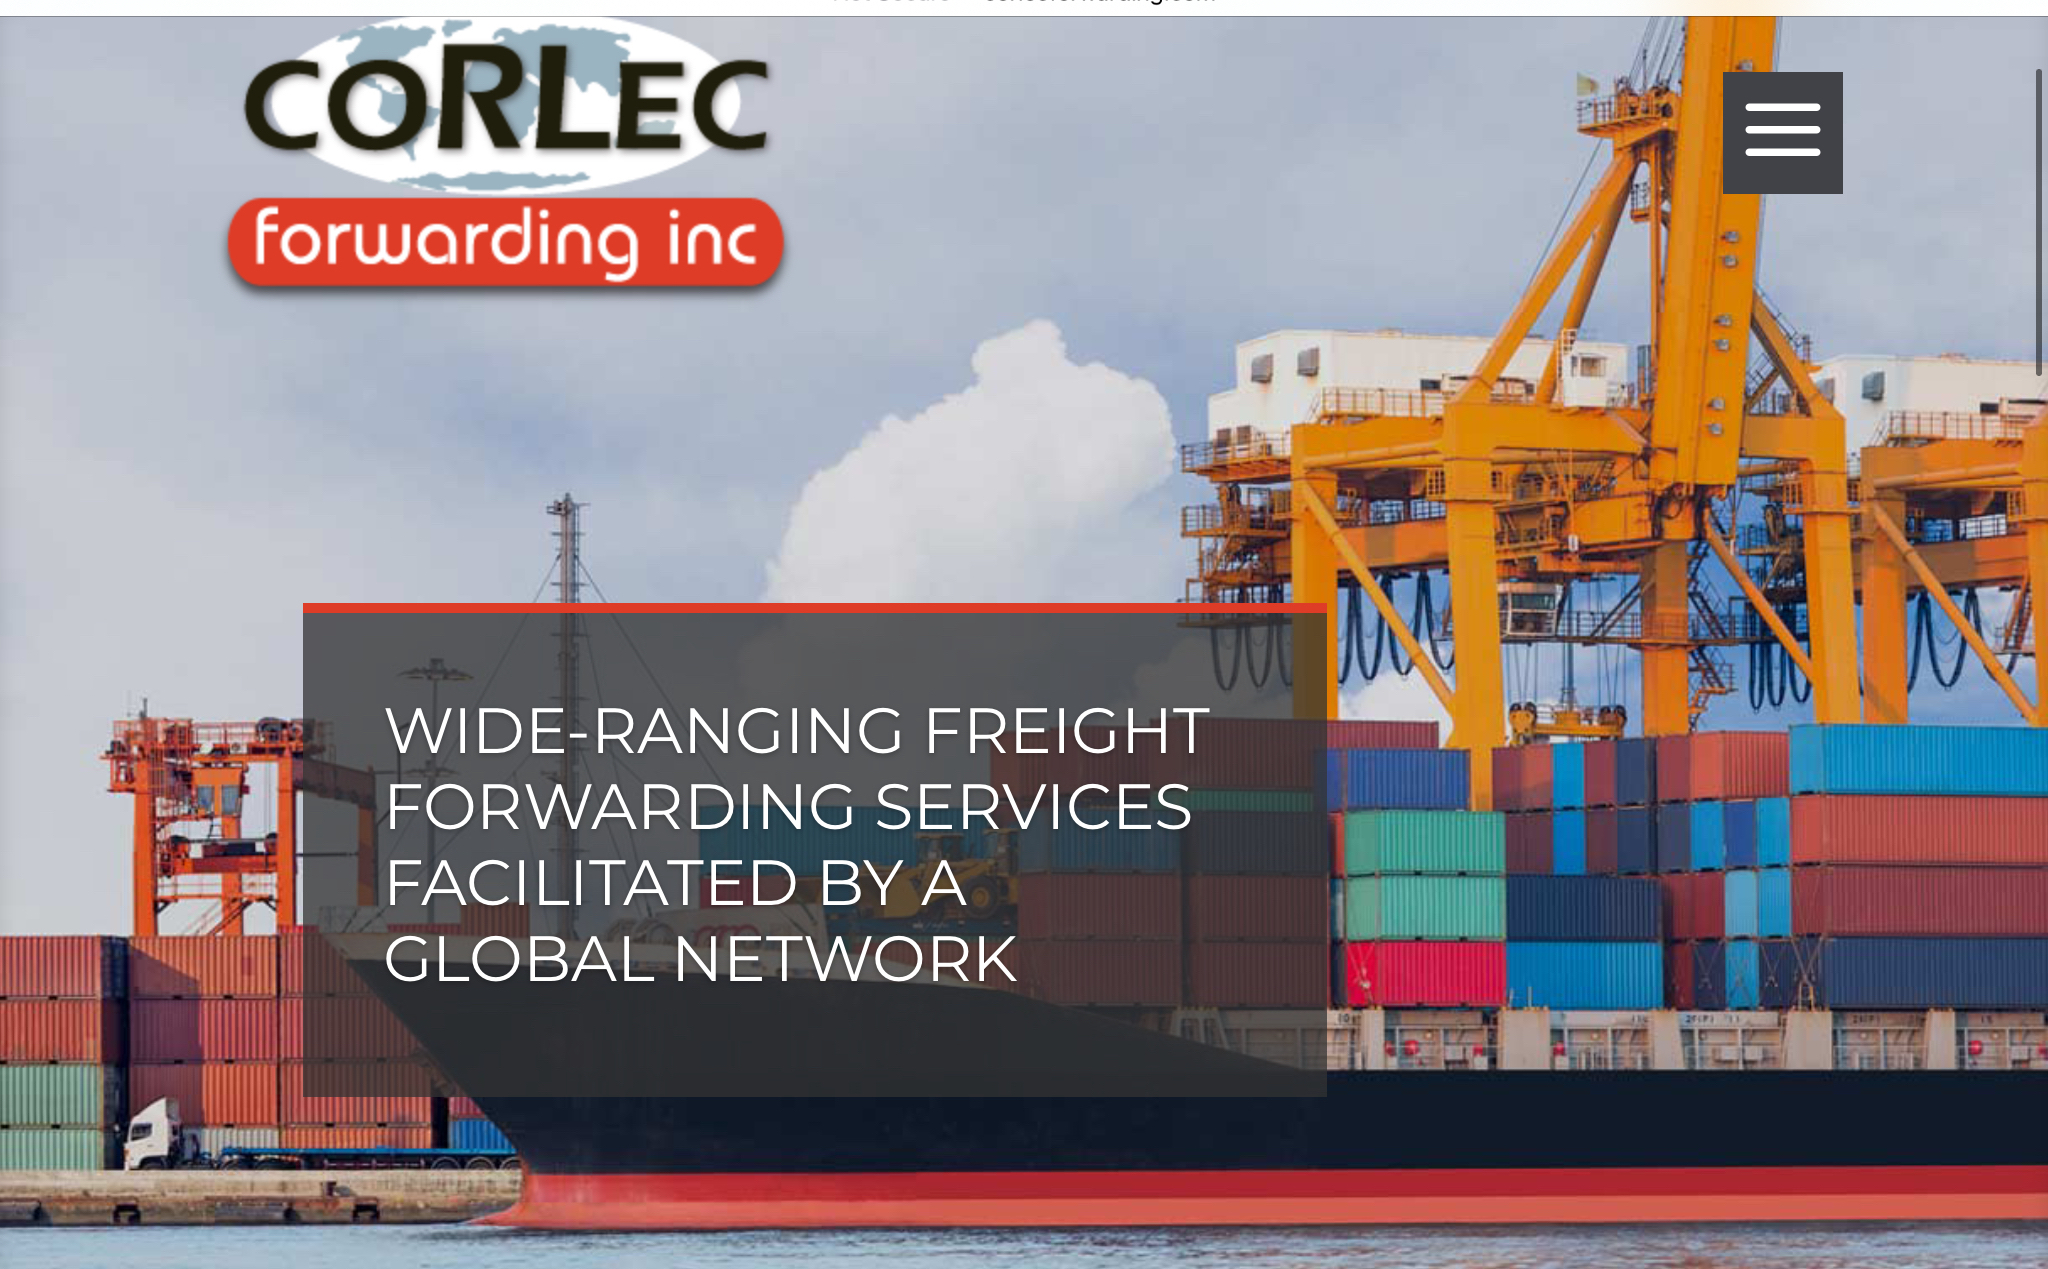 Corlec Forwarding Inc - Freight Consolidating & Forwarding